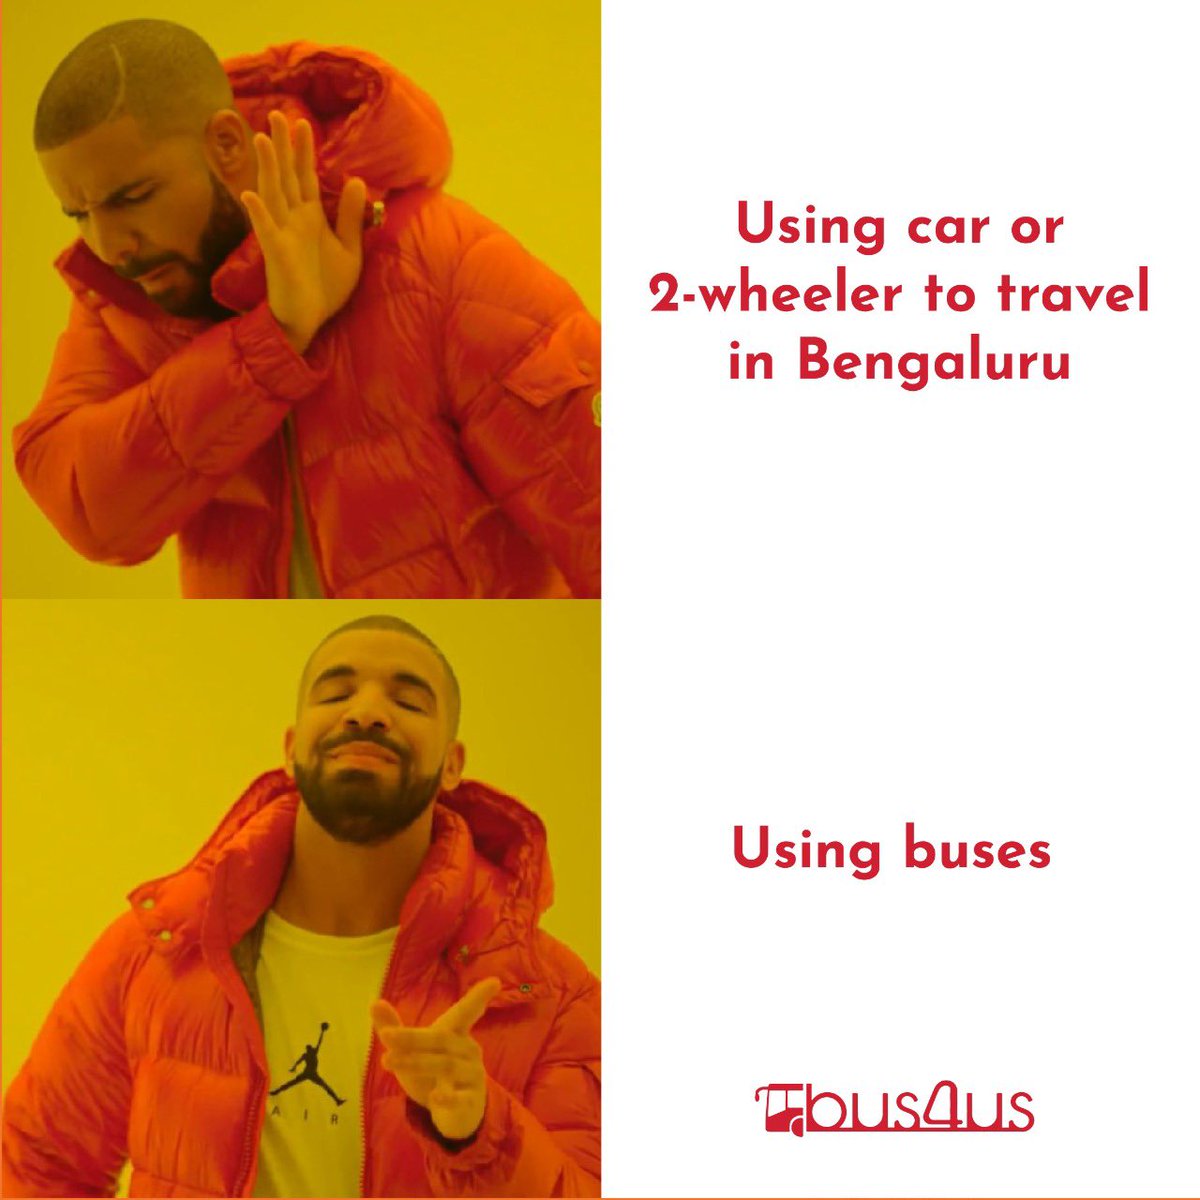 If you cringe hearing about the surging cab prices in the city, buses are the perfect antidote.
#bus4usisgood4us 
#bushattinagaravannubadalayissi 
#cringememes #drakememe #transportmeme #publicitymemes #viralmemes #viralmemesindia #bengalurumemes #bengalurumeme